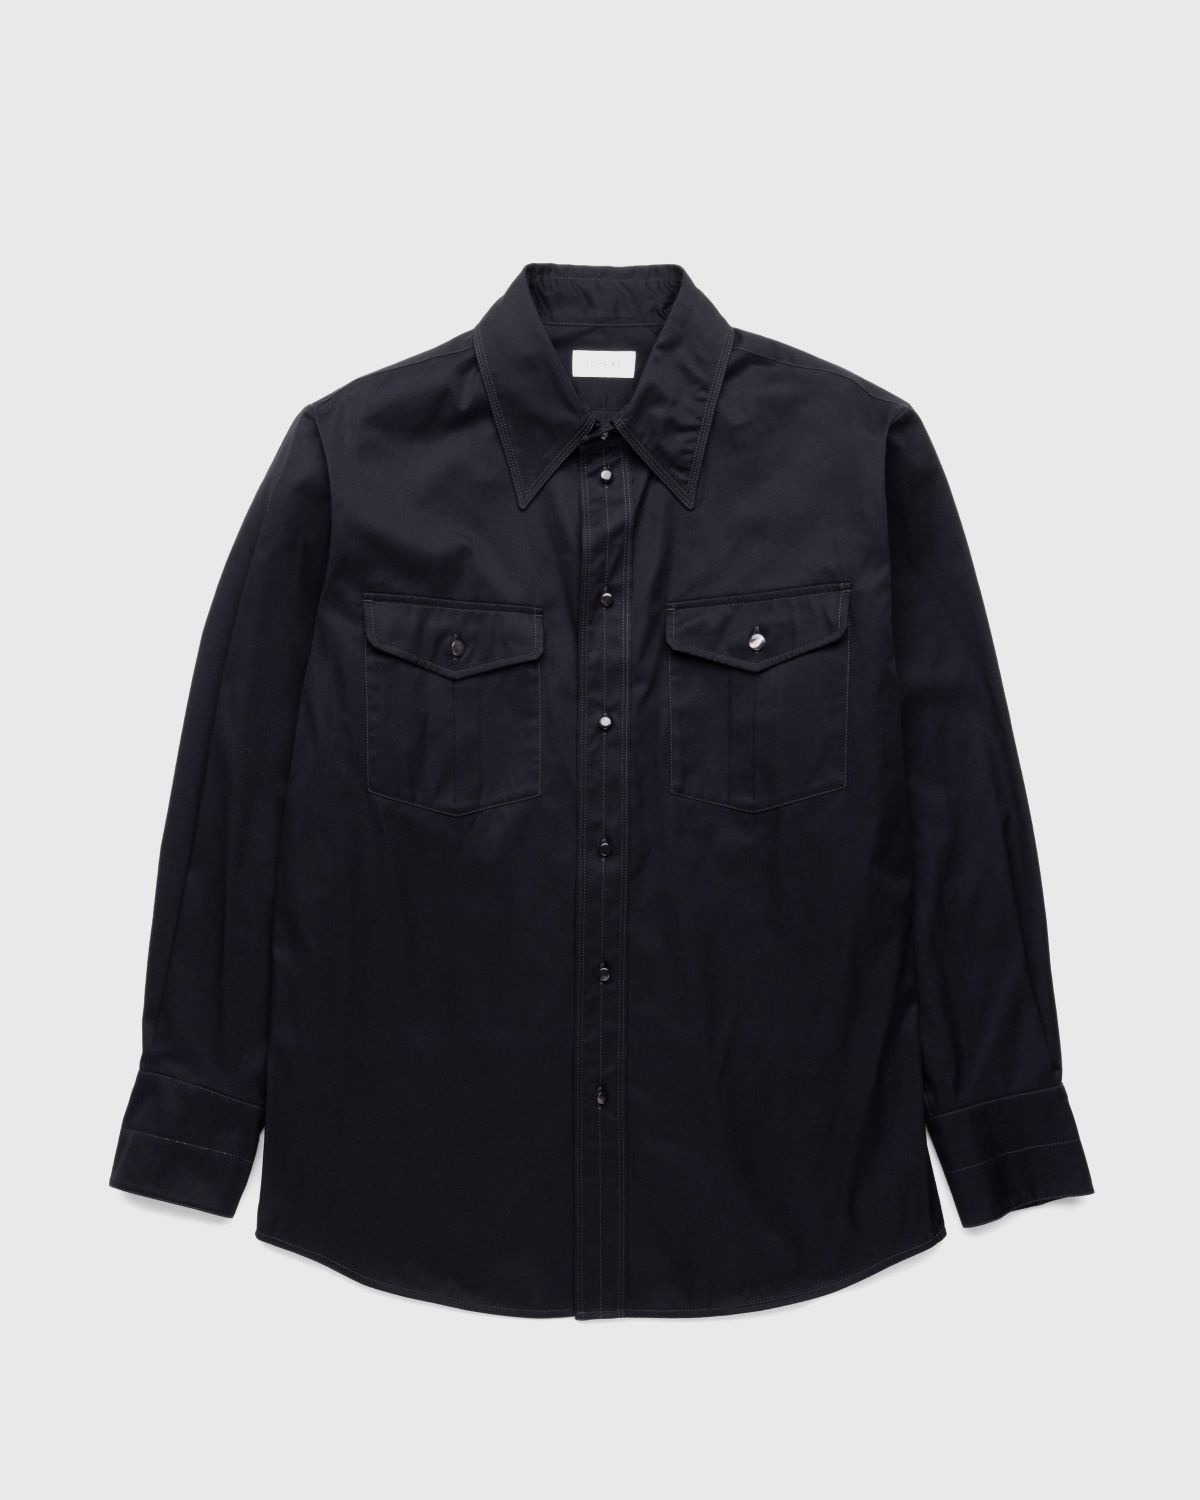 Black Contrast Stitching Shirt